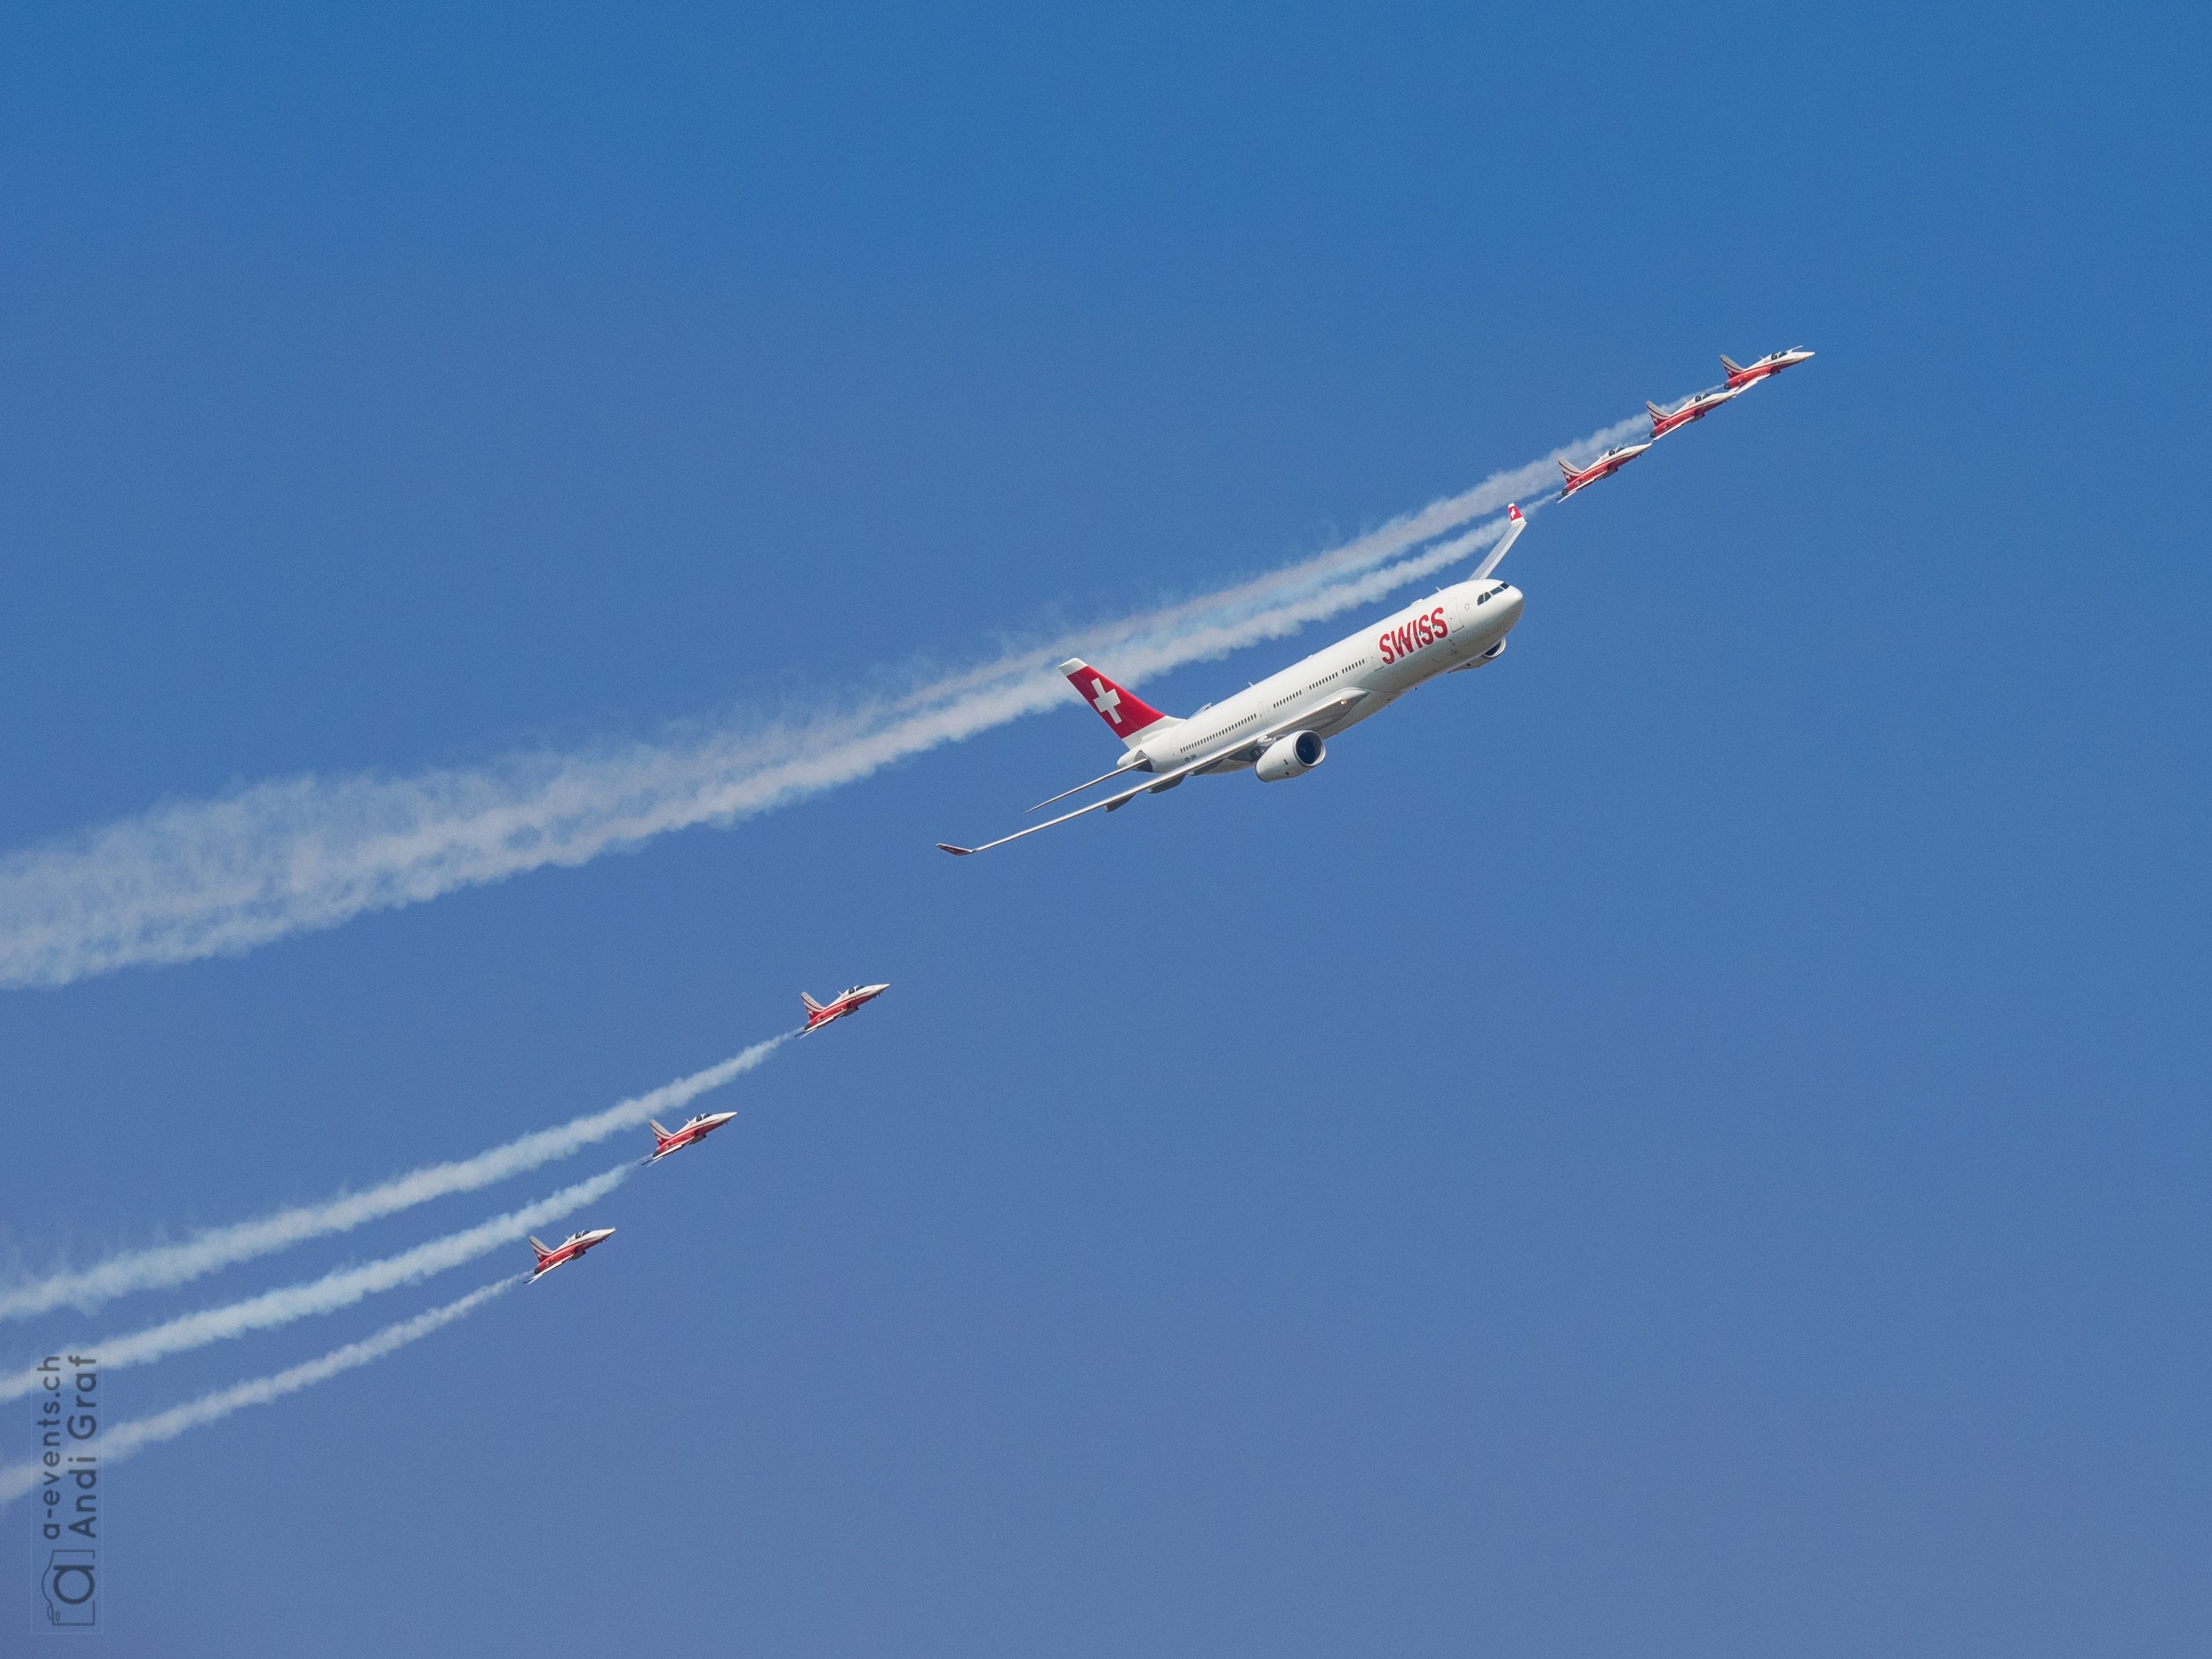 Passenger Aircraft, Fighter Jet, airplane, airshow